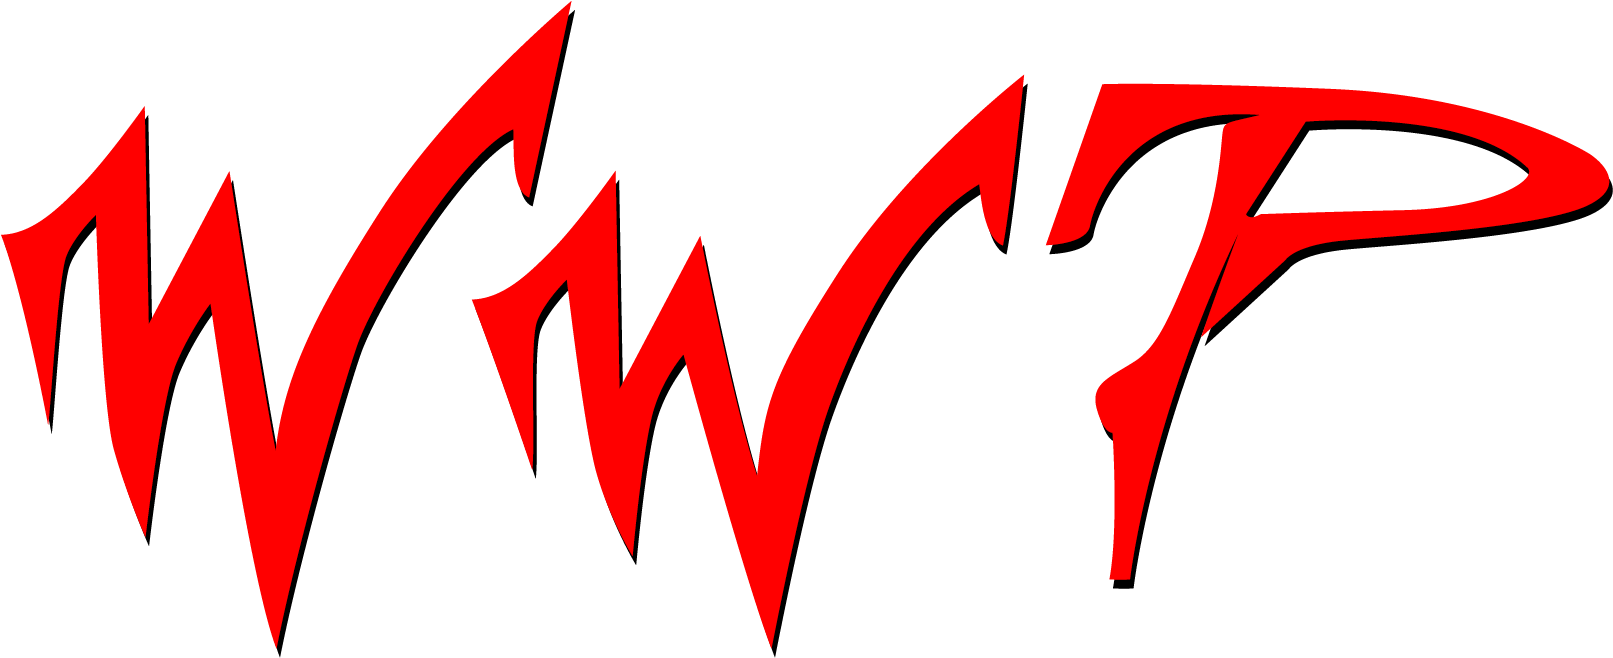 Wwp World Wrestling Professionals - World Wrestling Professionals (1667x833)